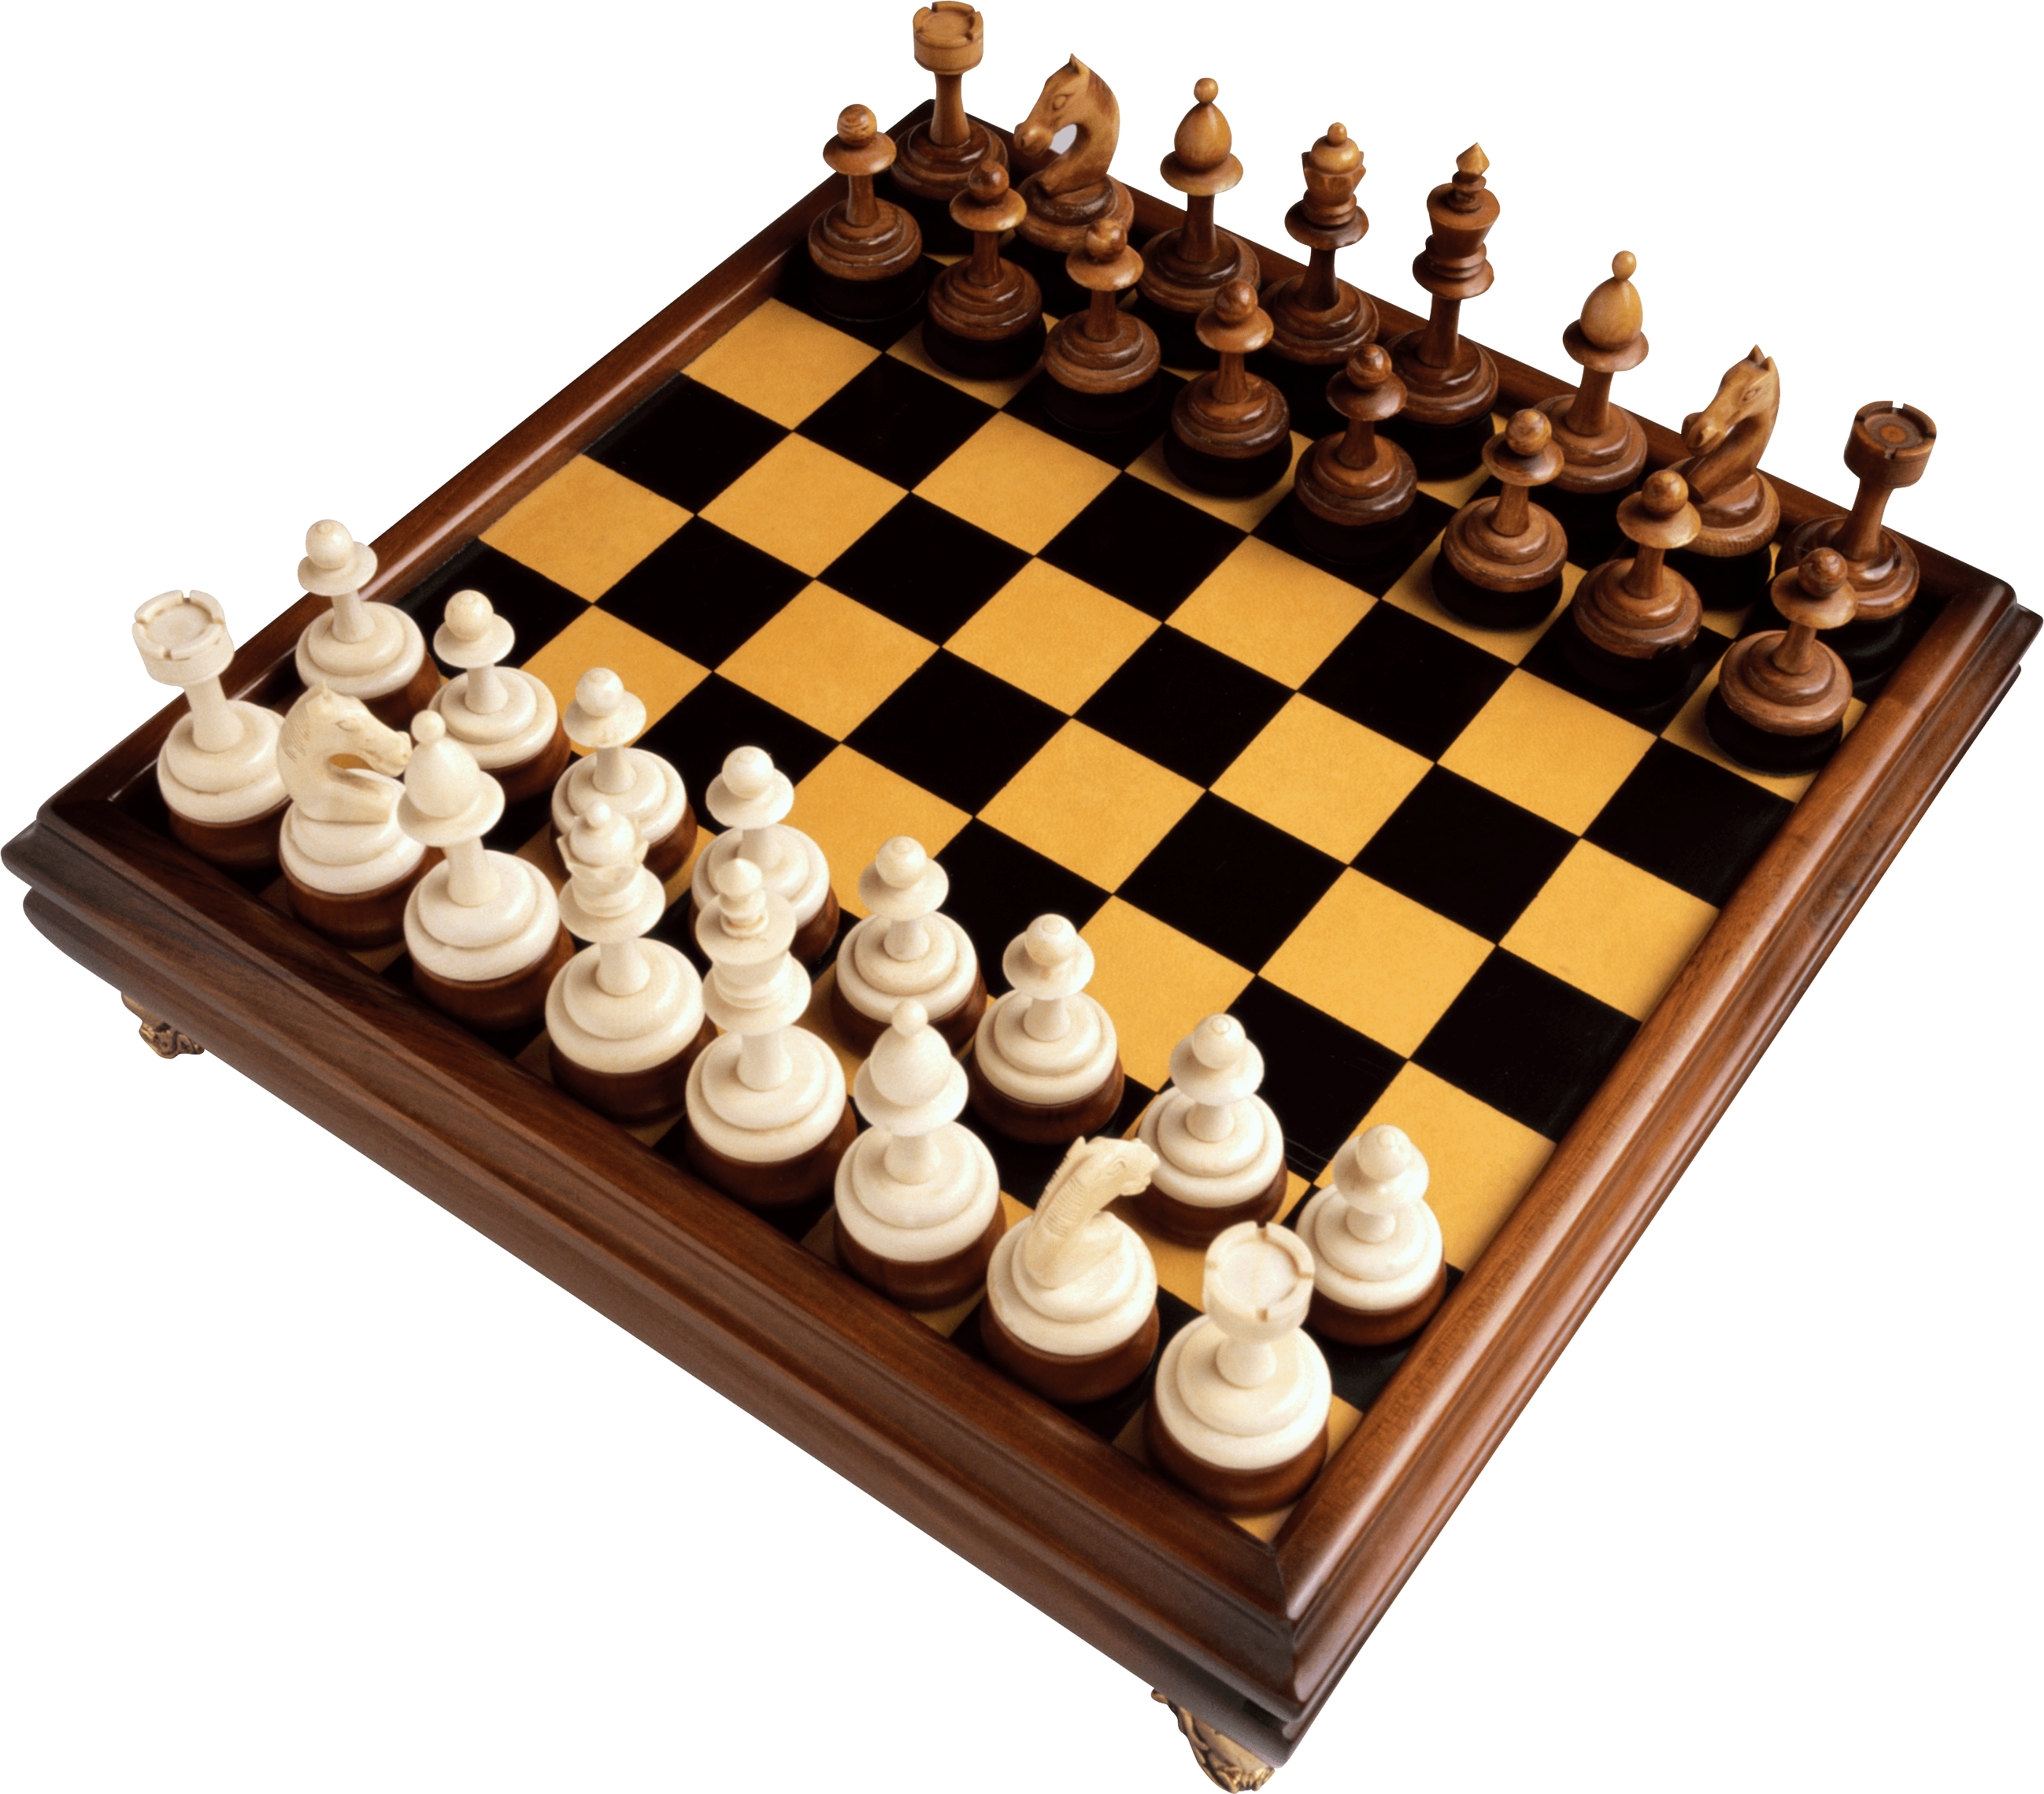 Download Chess Board Png Image Hq Png Image Freepngimg